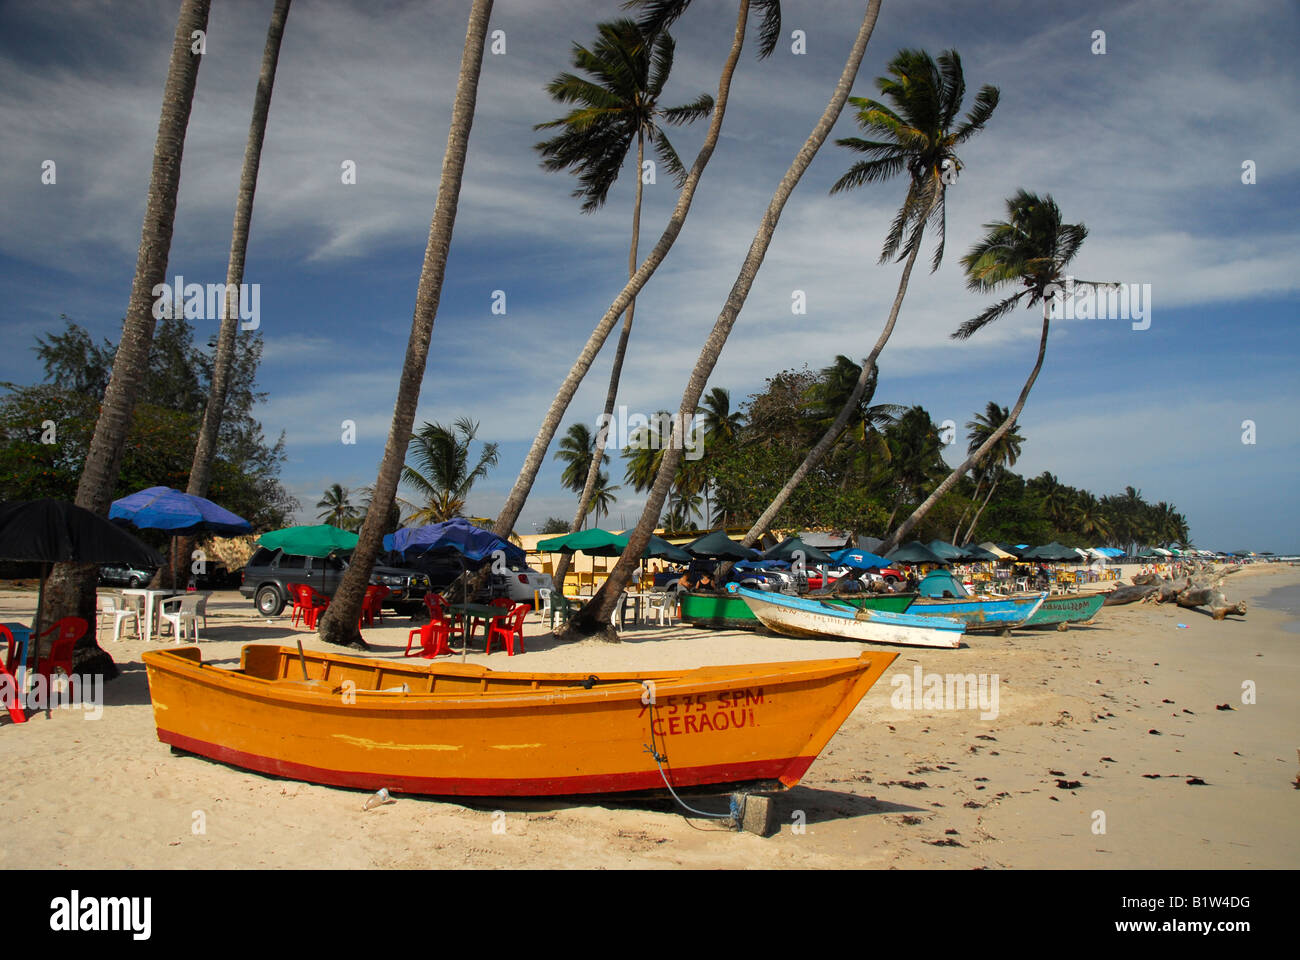 Fishing boats on beach in Guayacanes, Dominican Republic Stock Photo